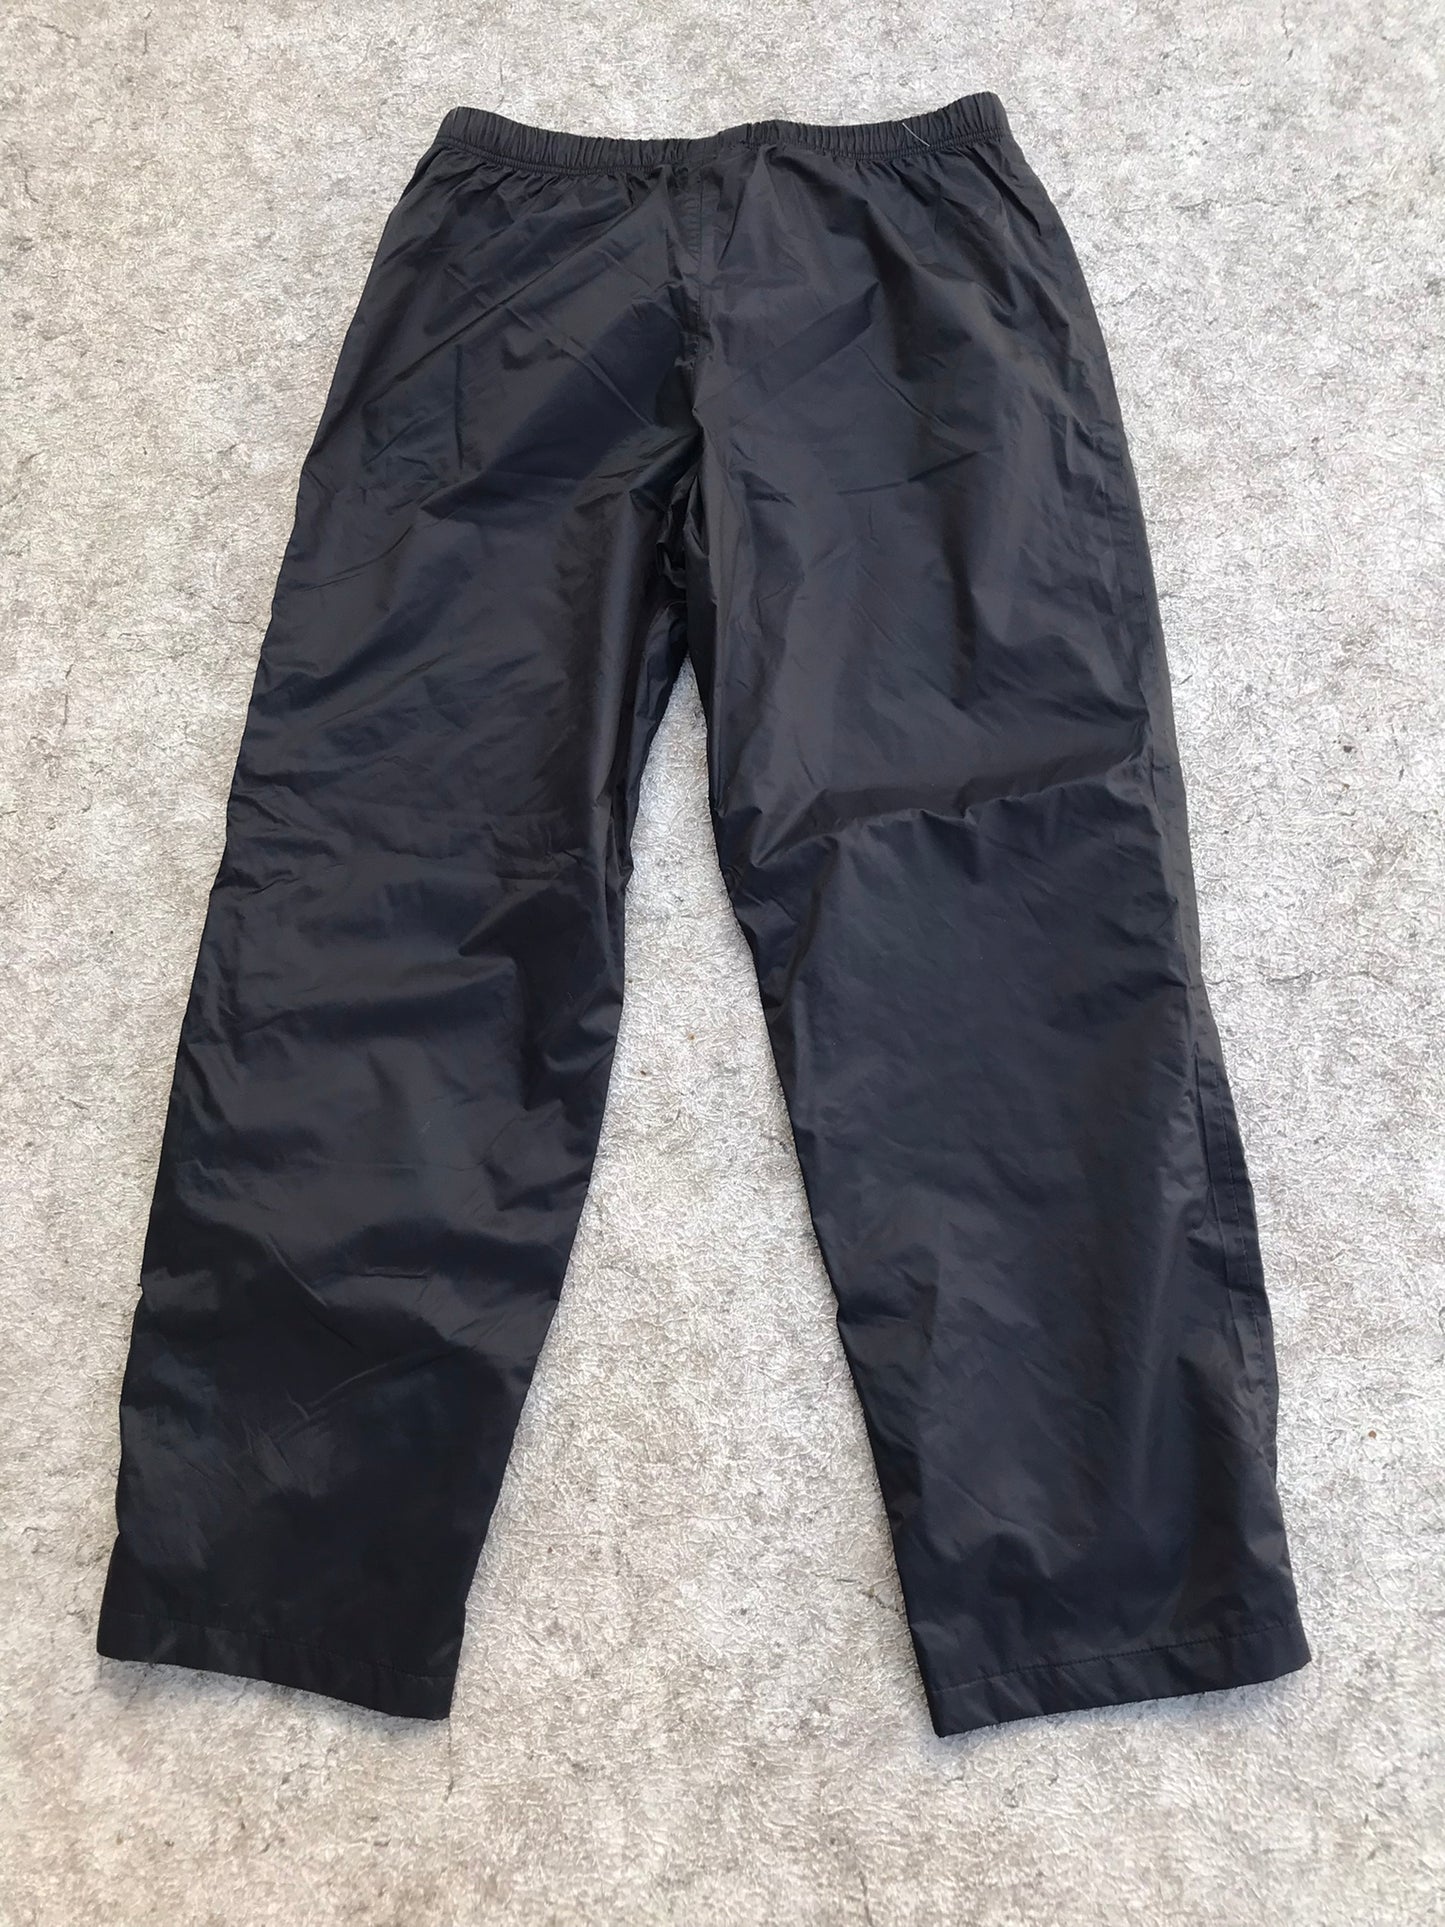 Rain Pants Men's Size Medium Deep River Black Velcro Cuffs Perfect New Demo Model